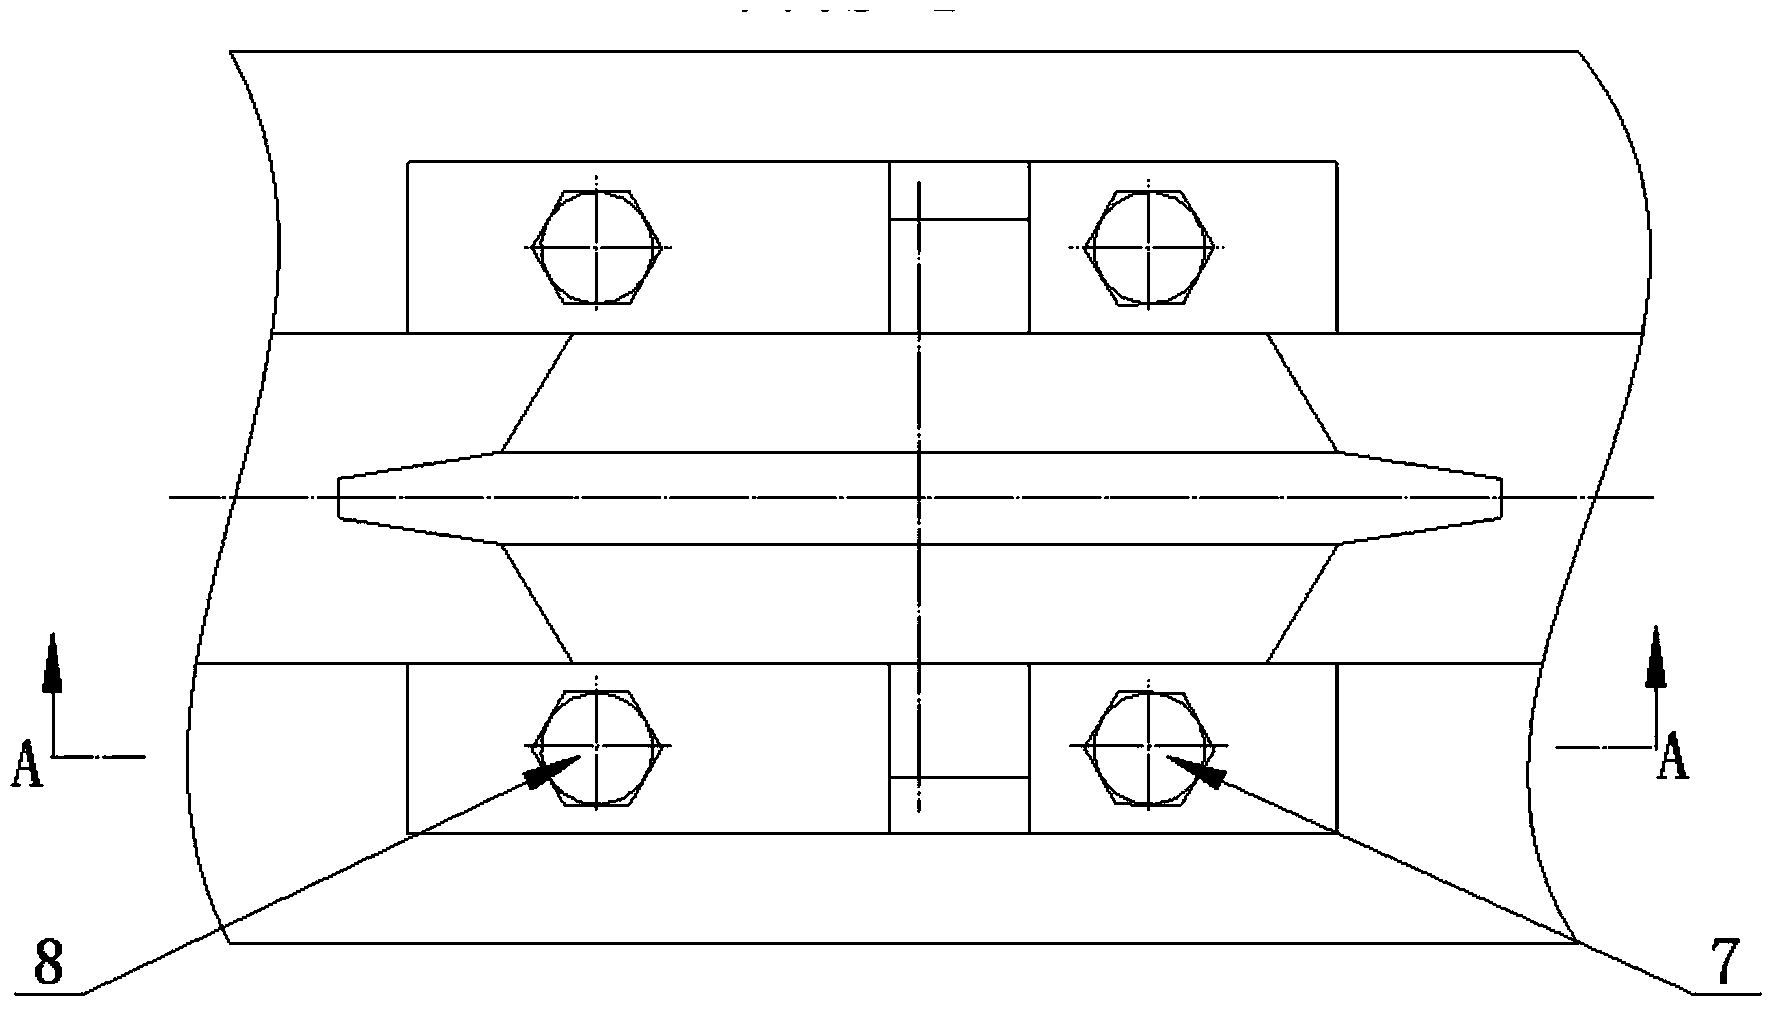 Hob height adjustment methods based on gaskets and positioning blocks